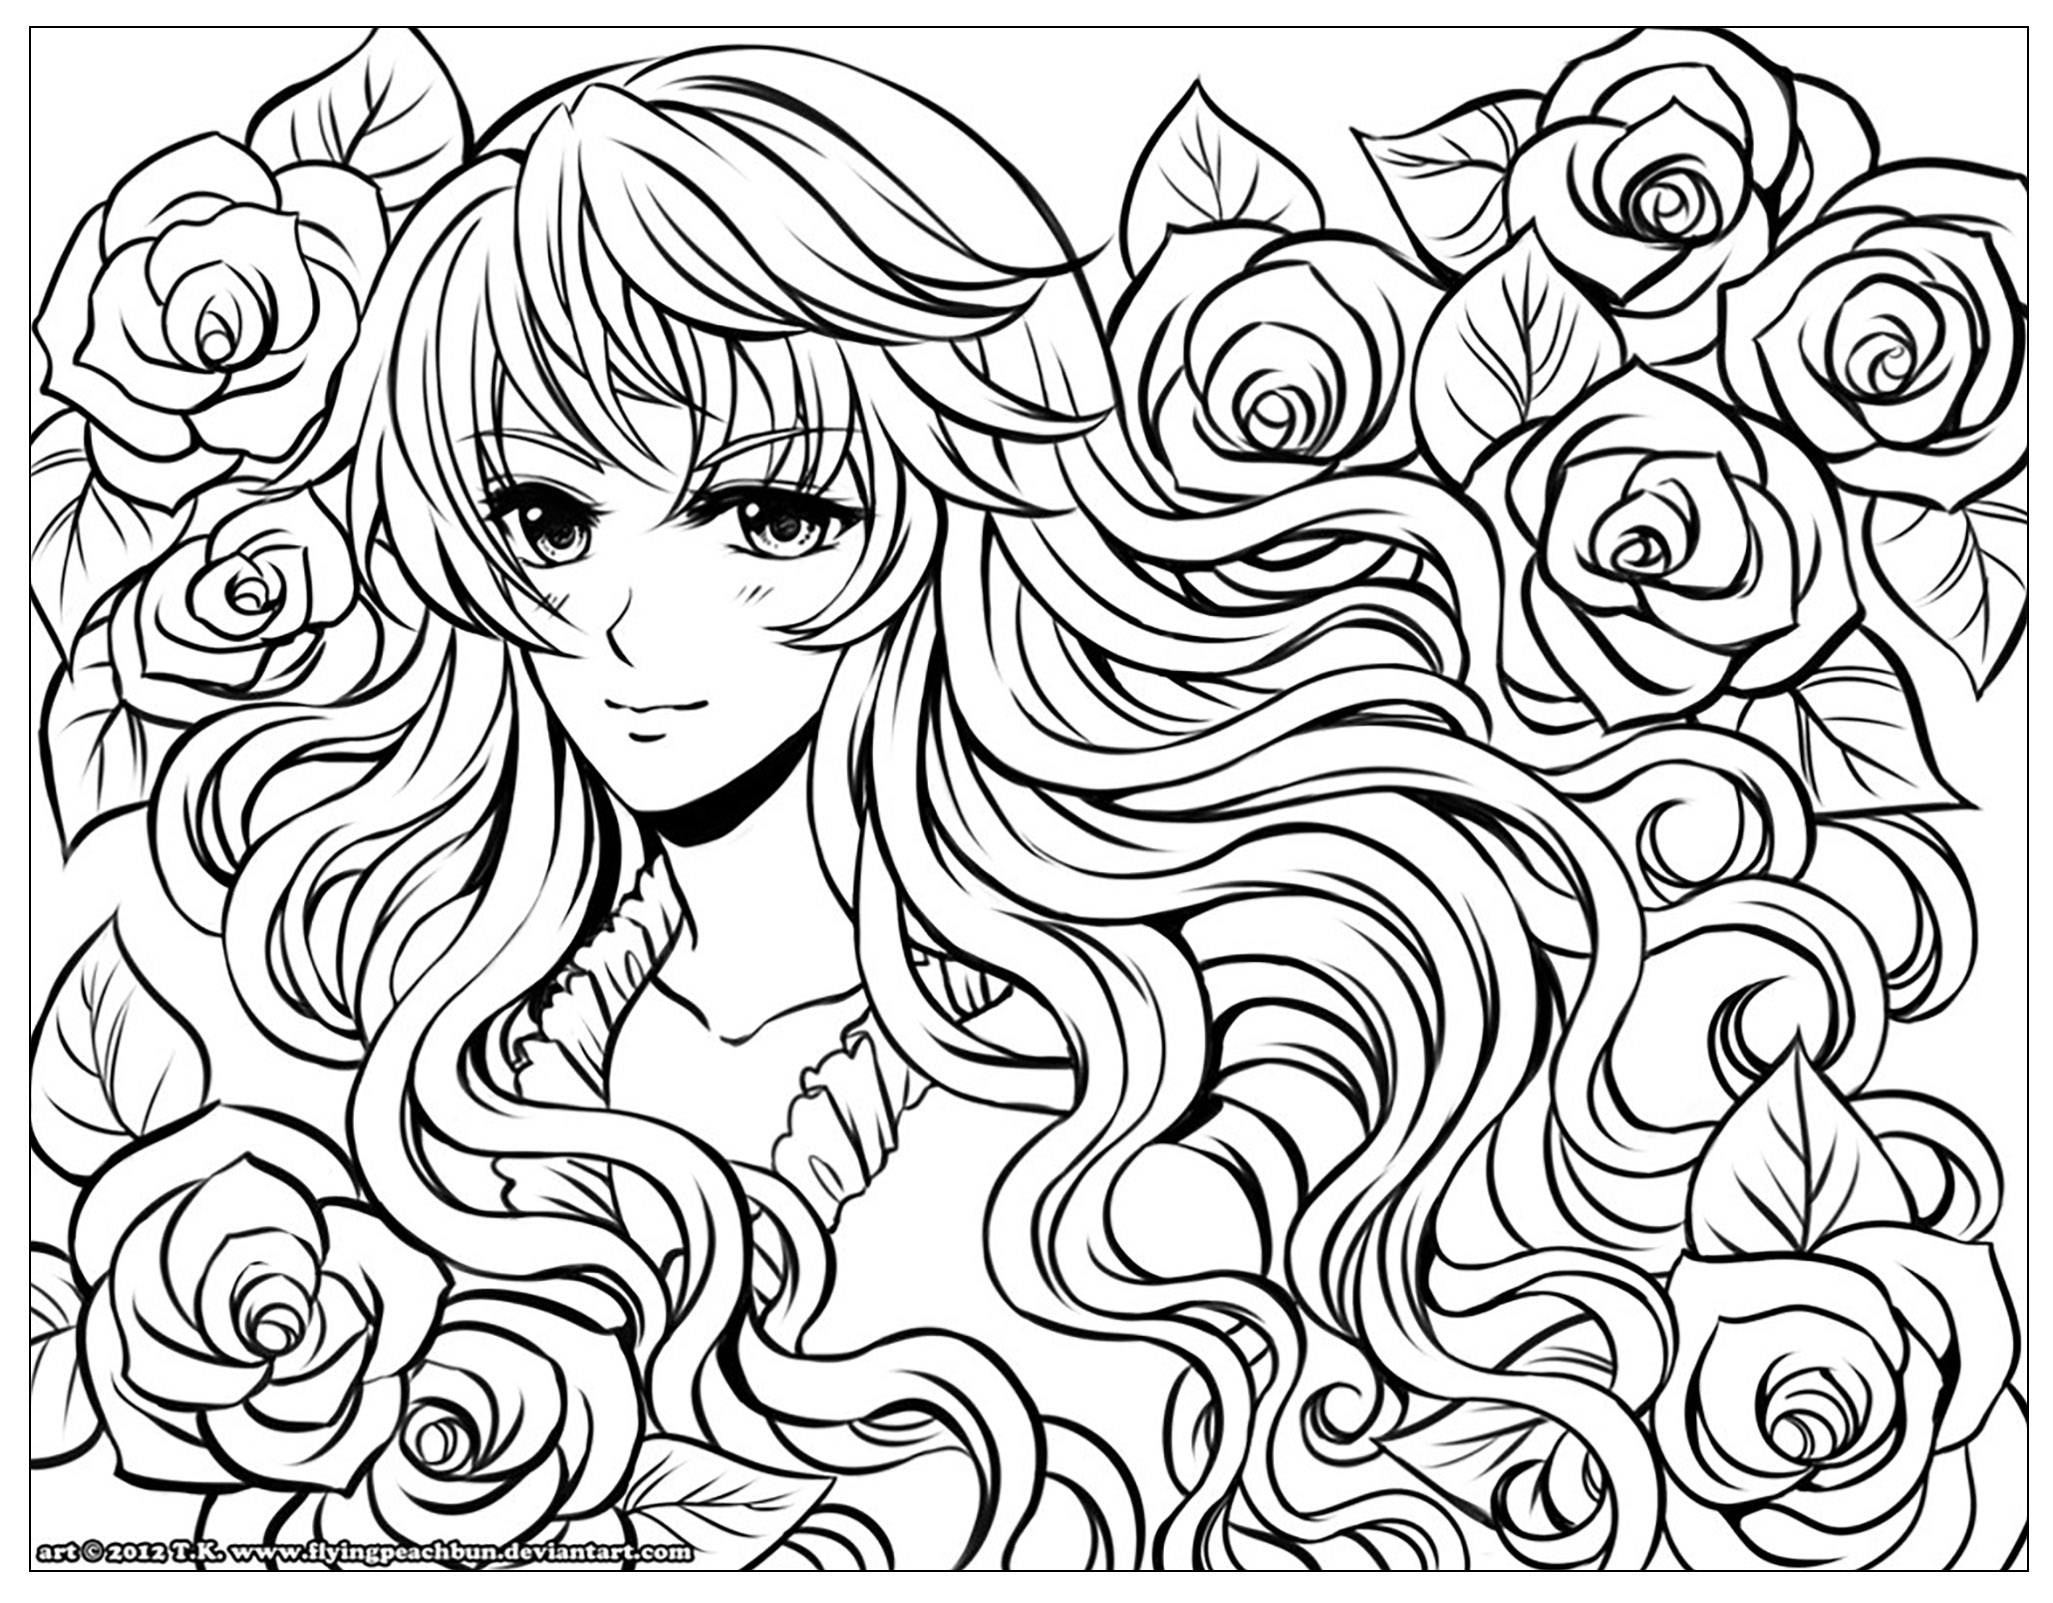 manga image=mangas coloring page manga girl with flowers by flyingpeachbun 1